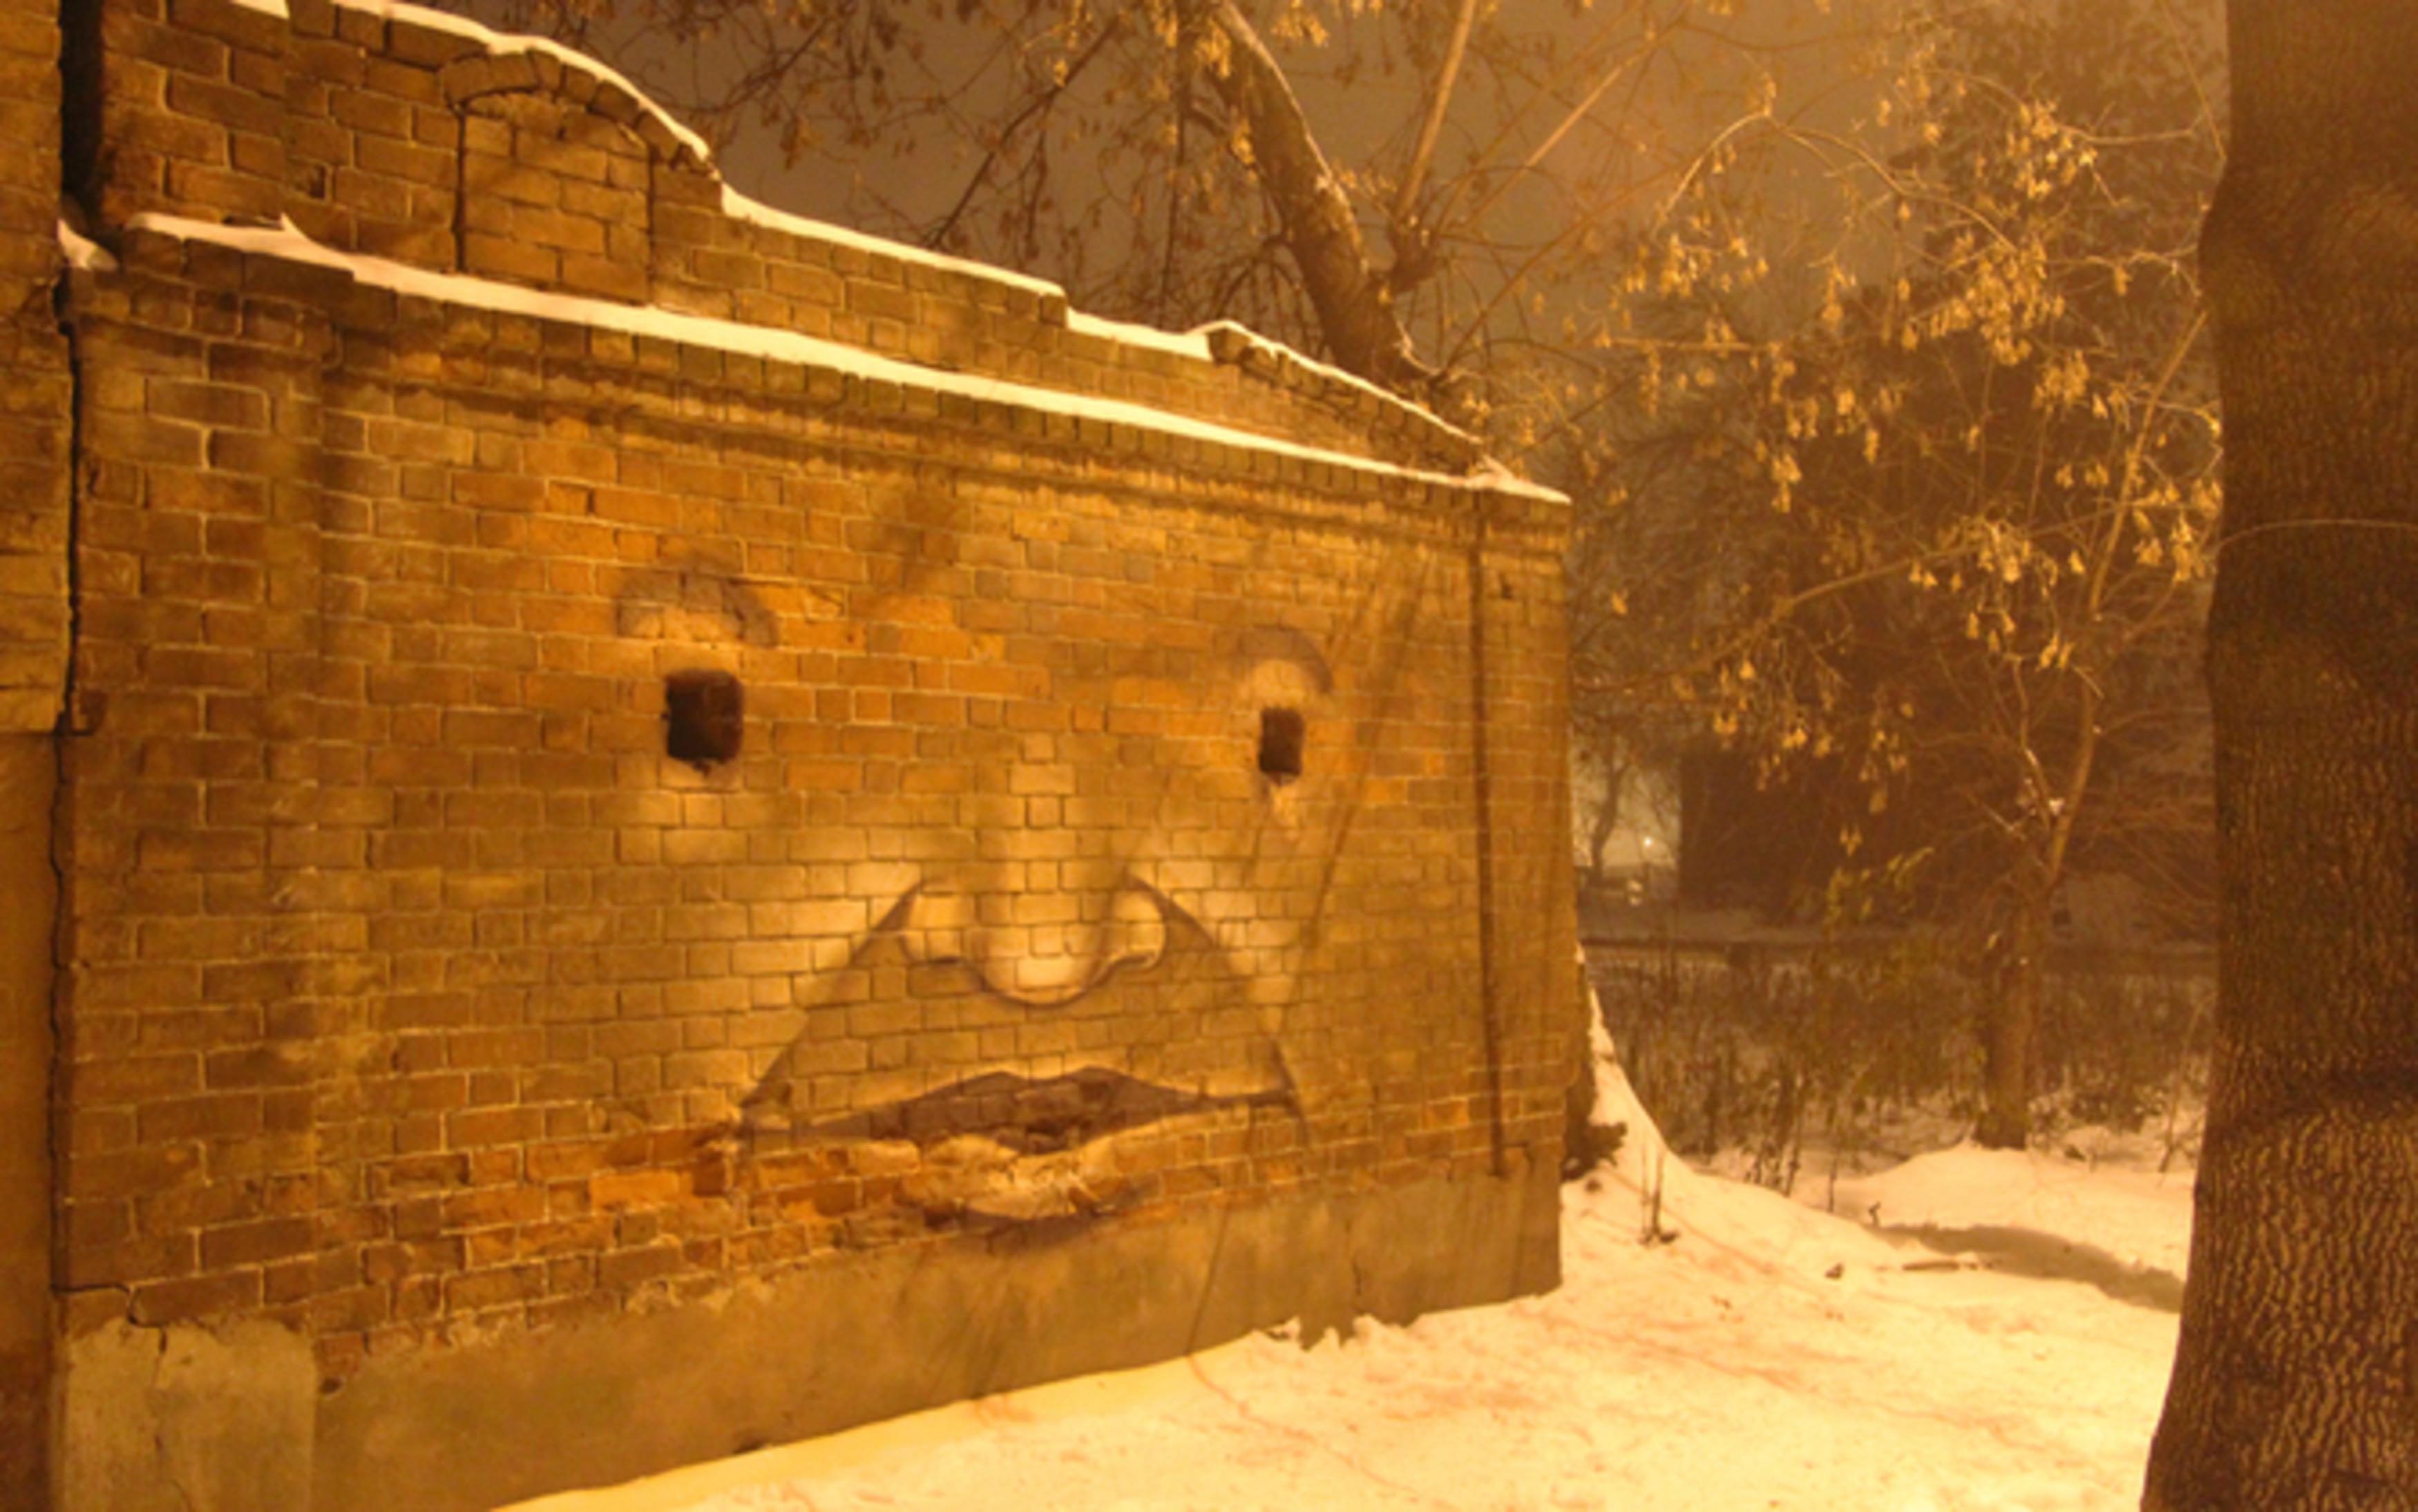 Nikita Nomerz graffiti arte de rua russo faces vida (21)